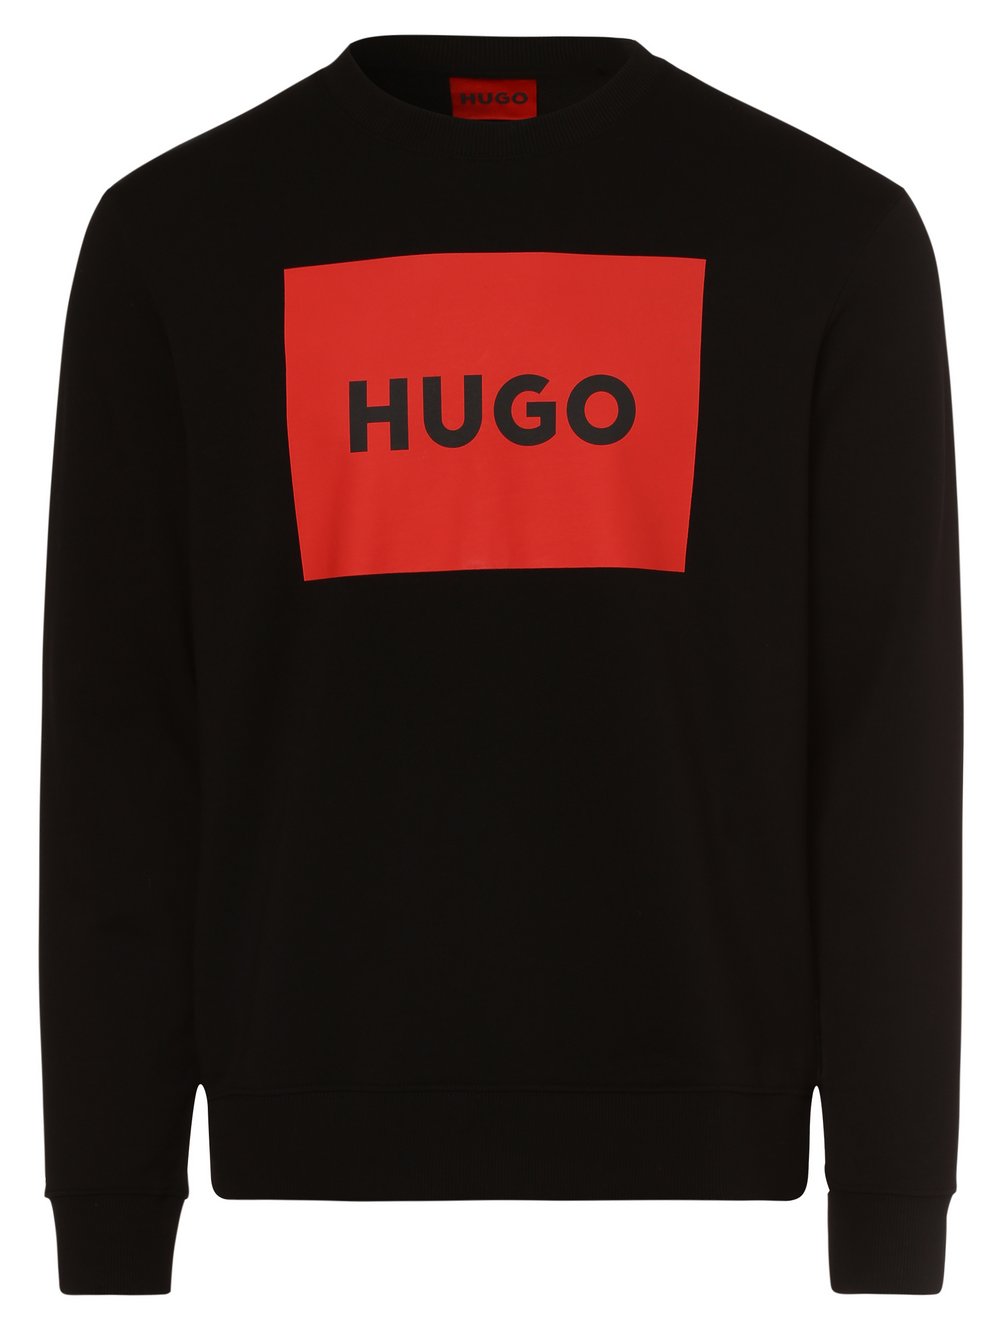 HUGO - Męska bluza nierozpinana – Duragol222, czarny